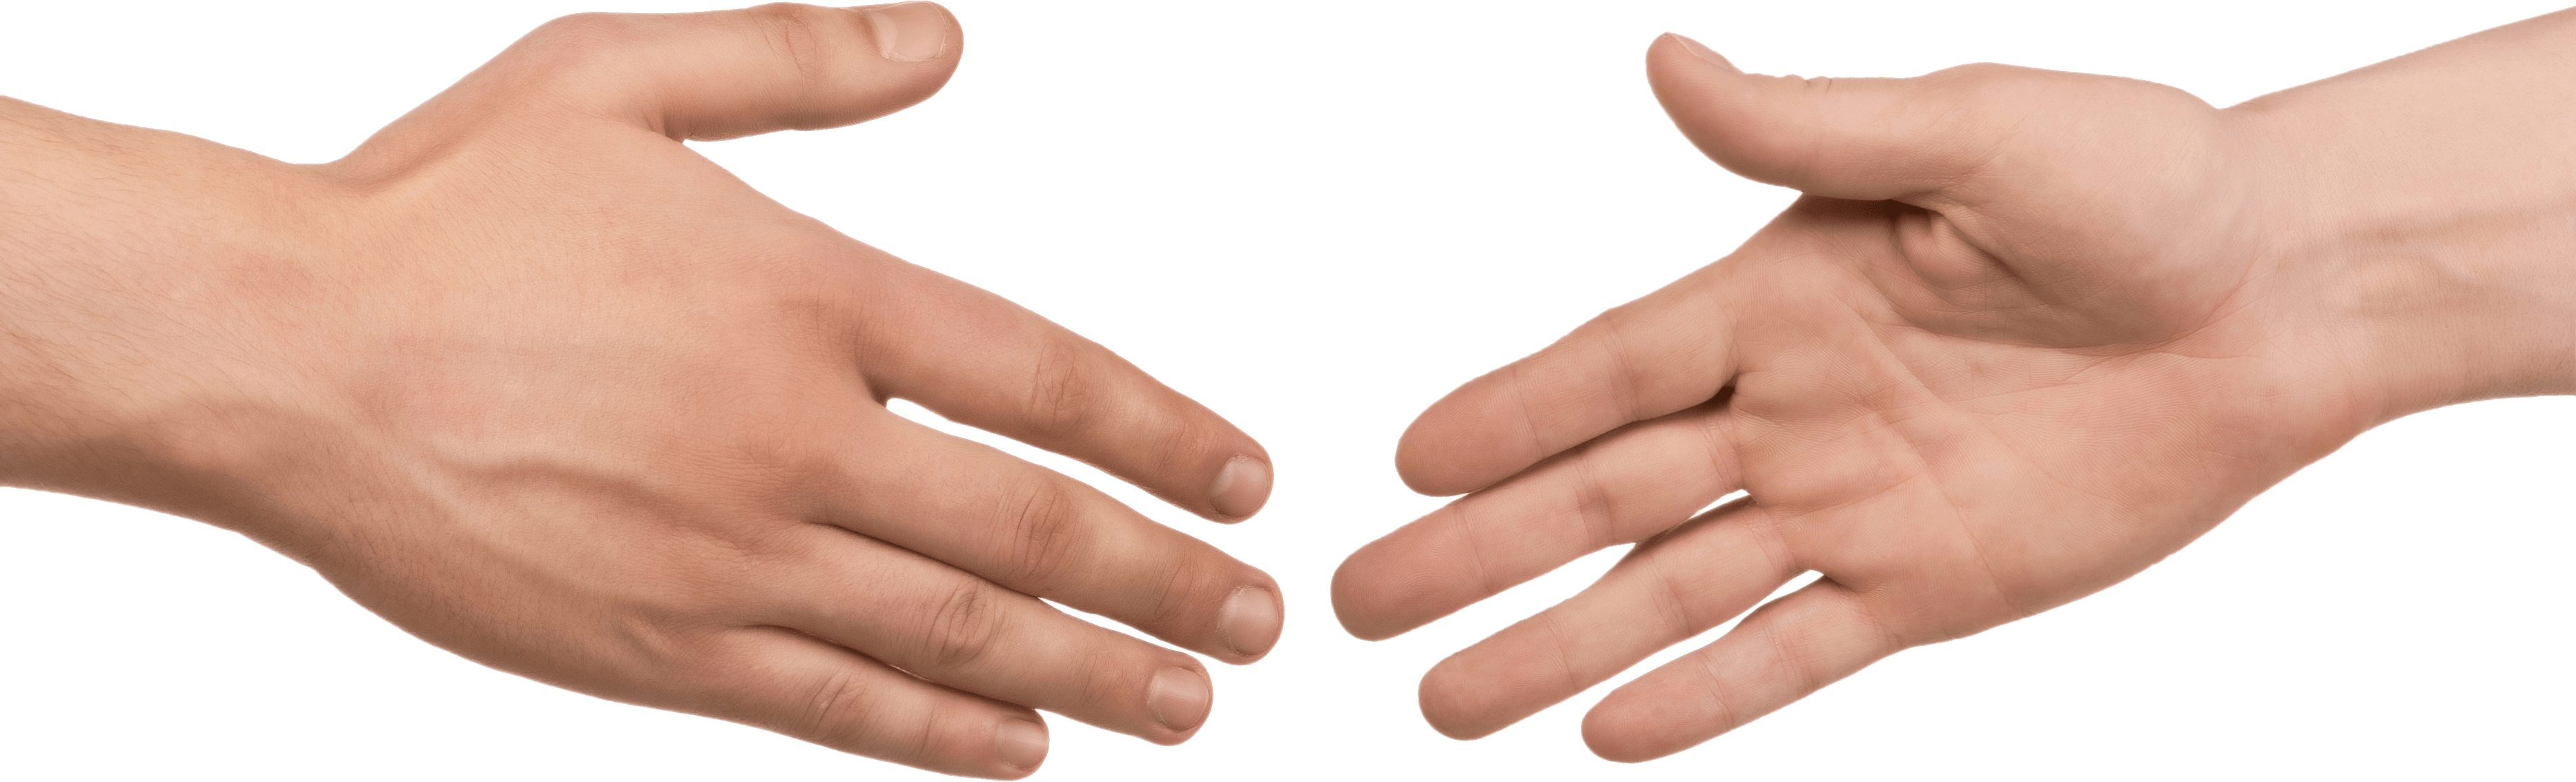 Finger People Course Regard Partnership PNG